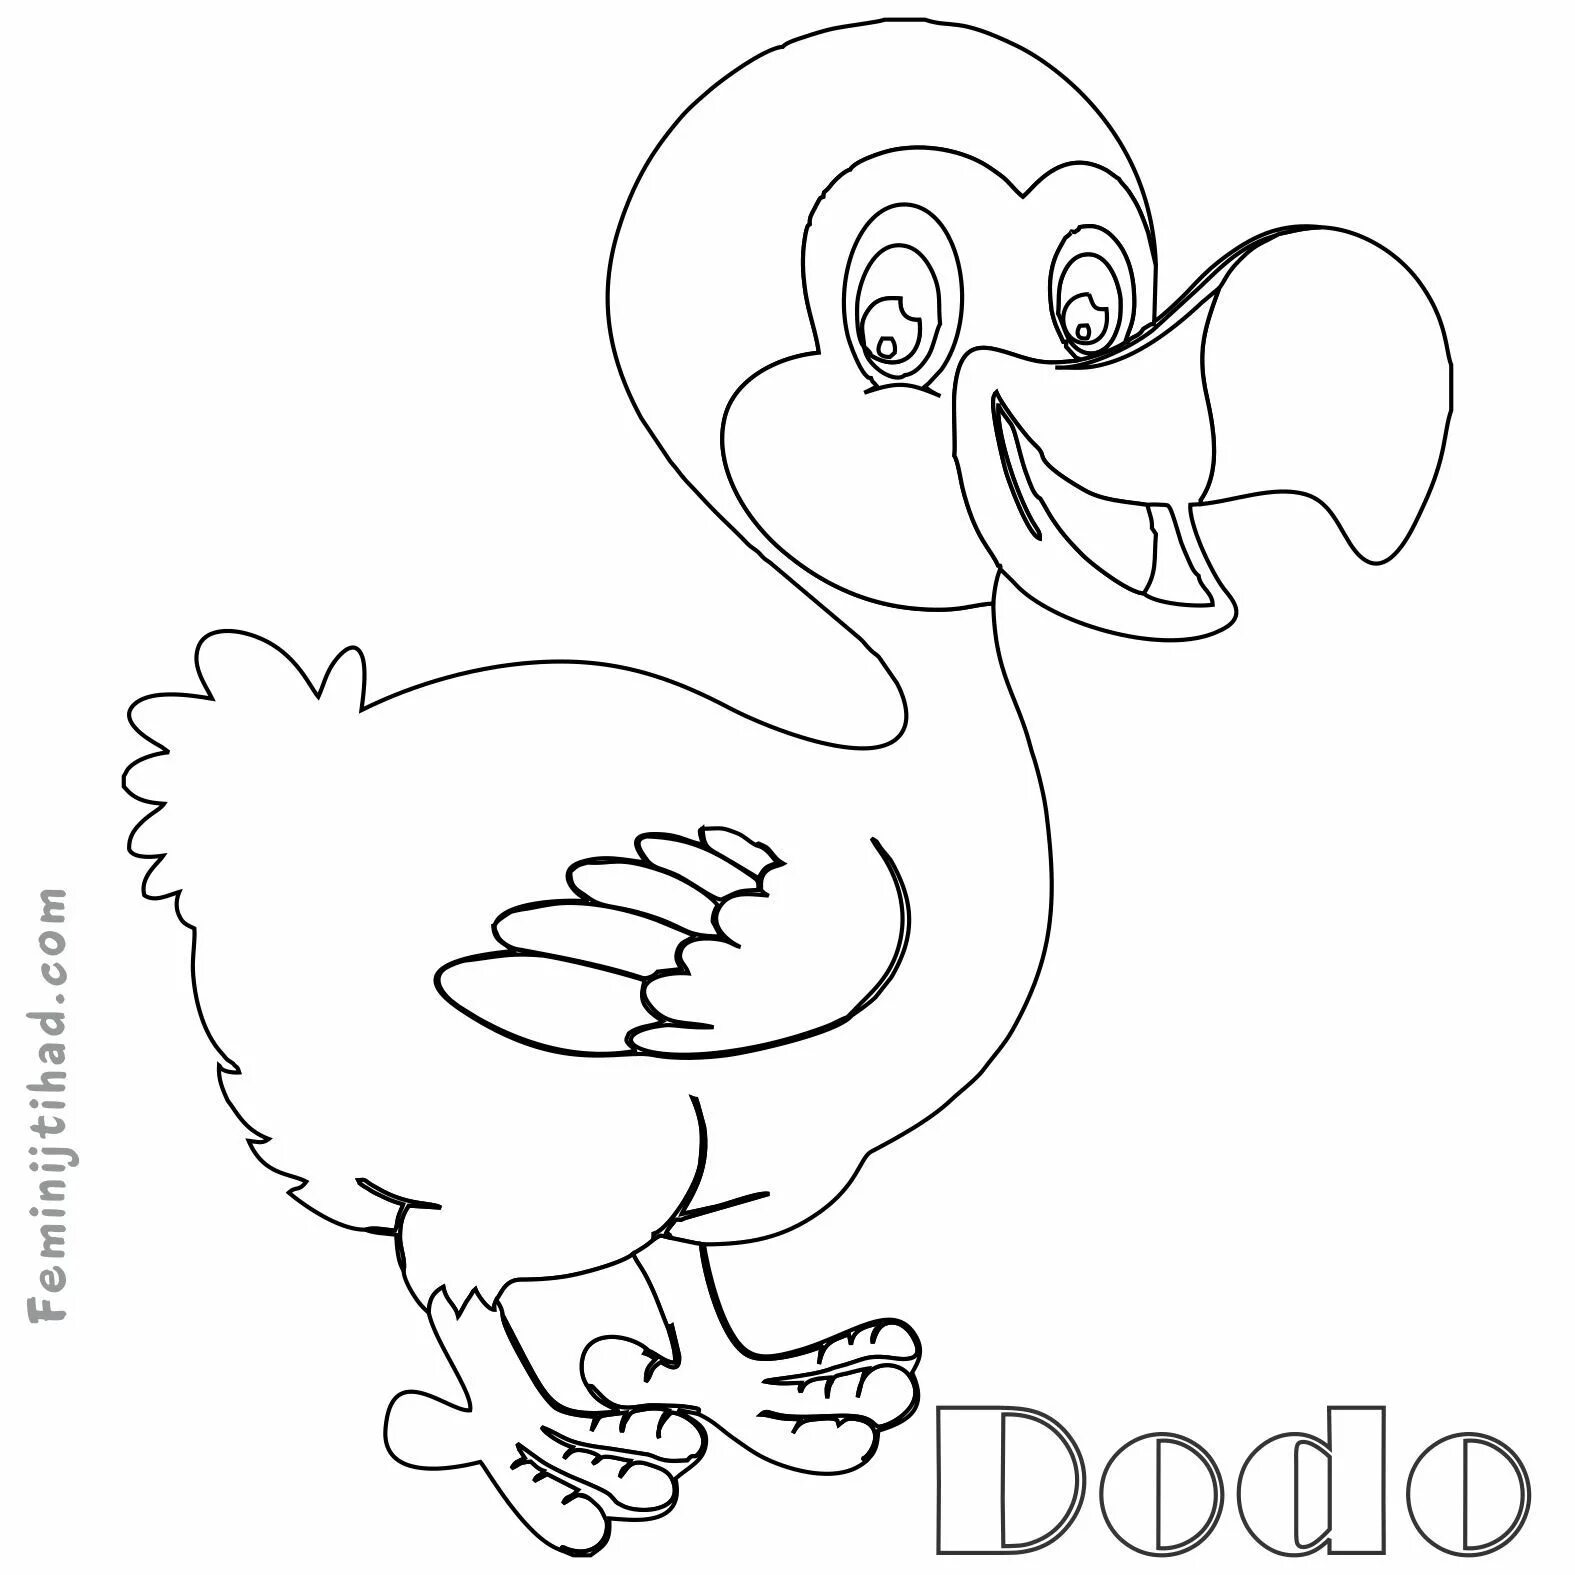 Dodo bird #1